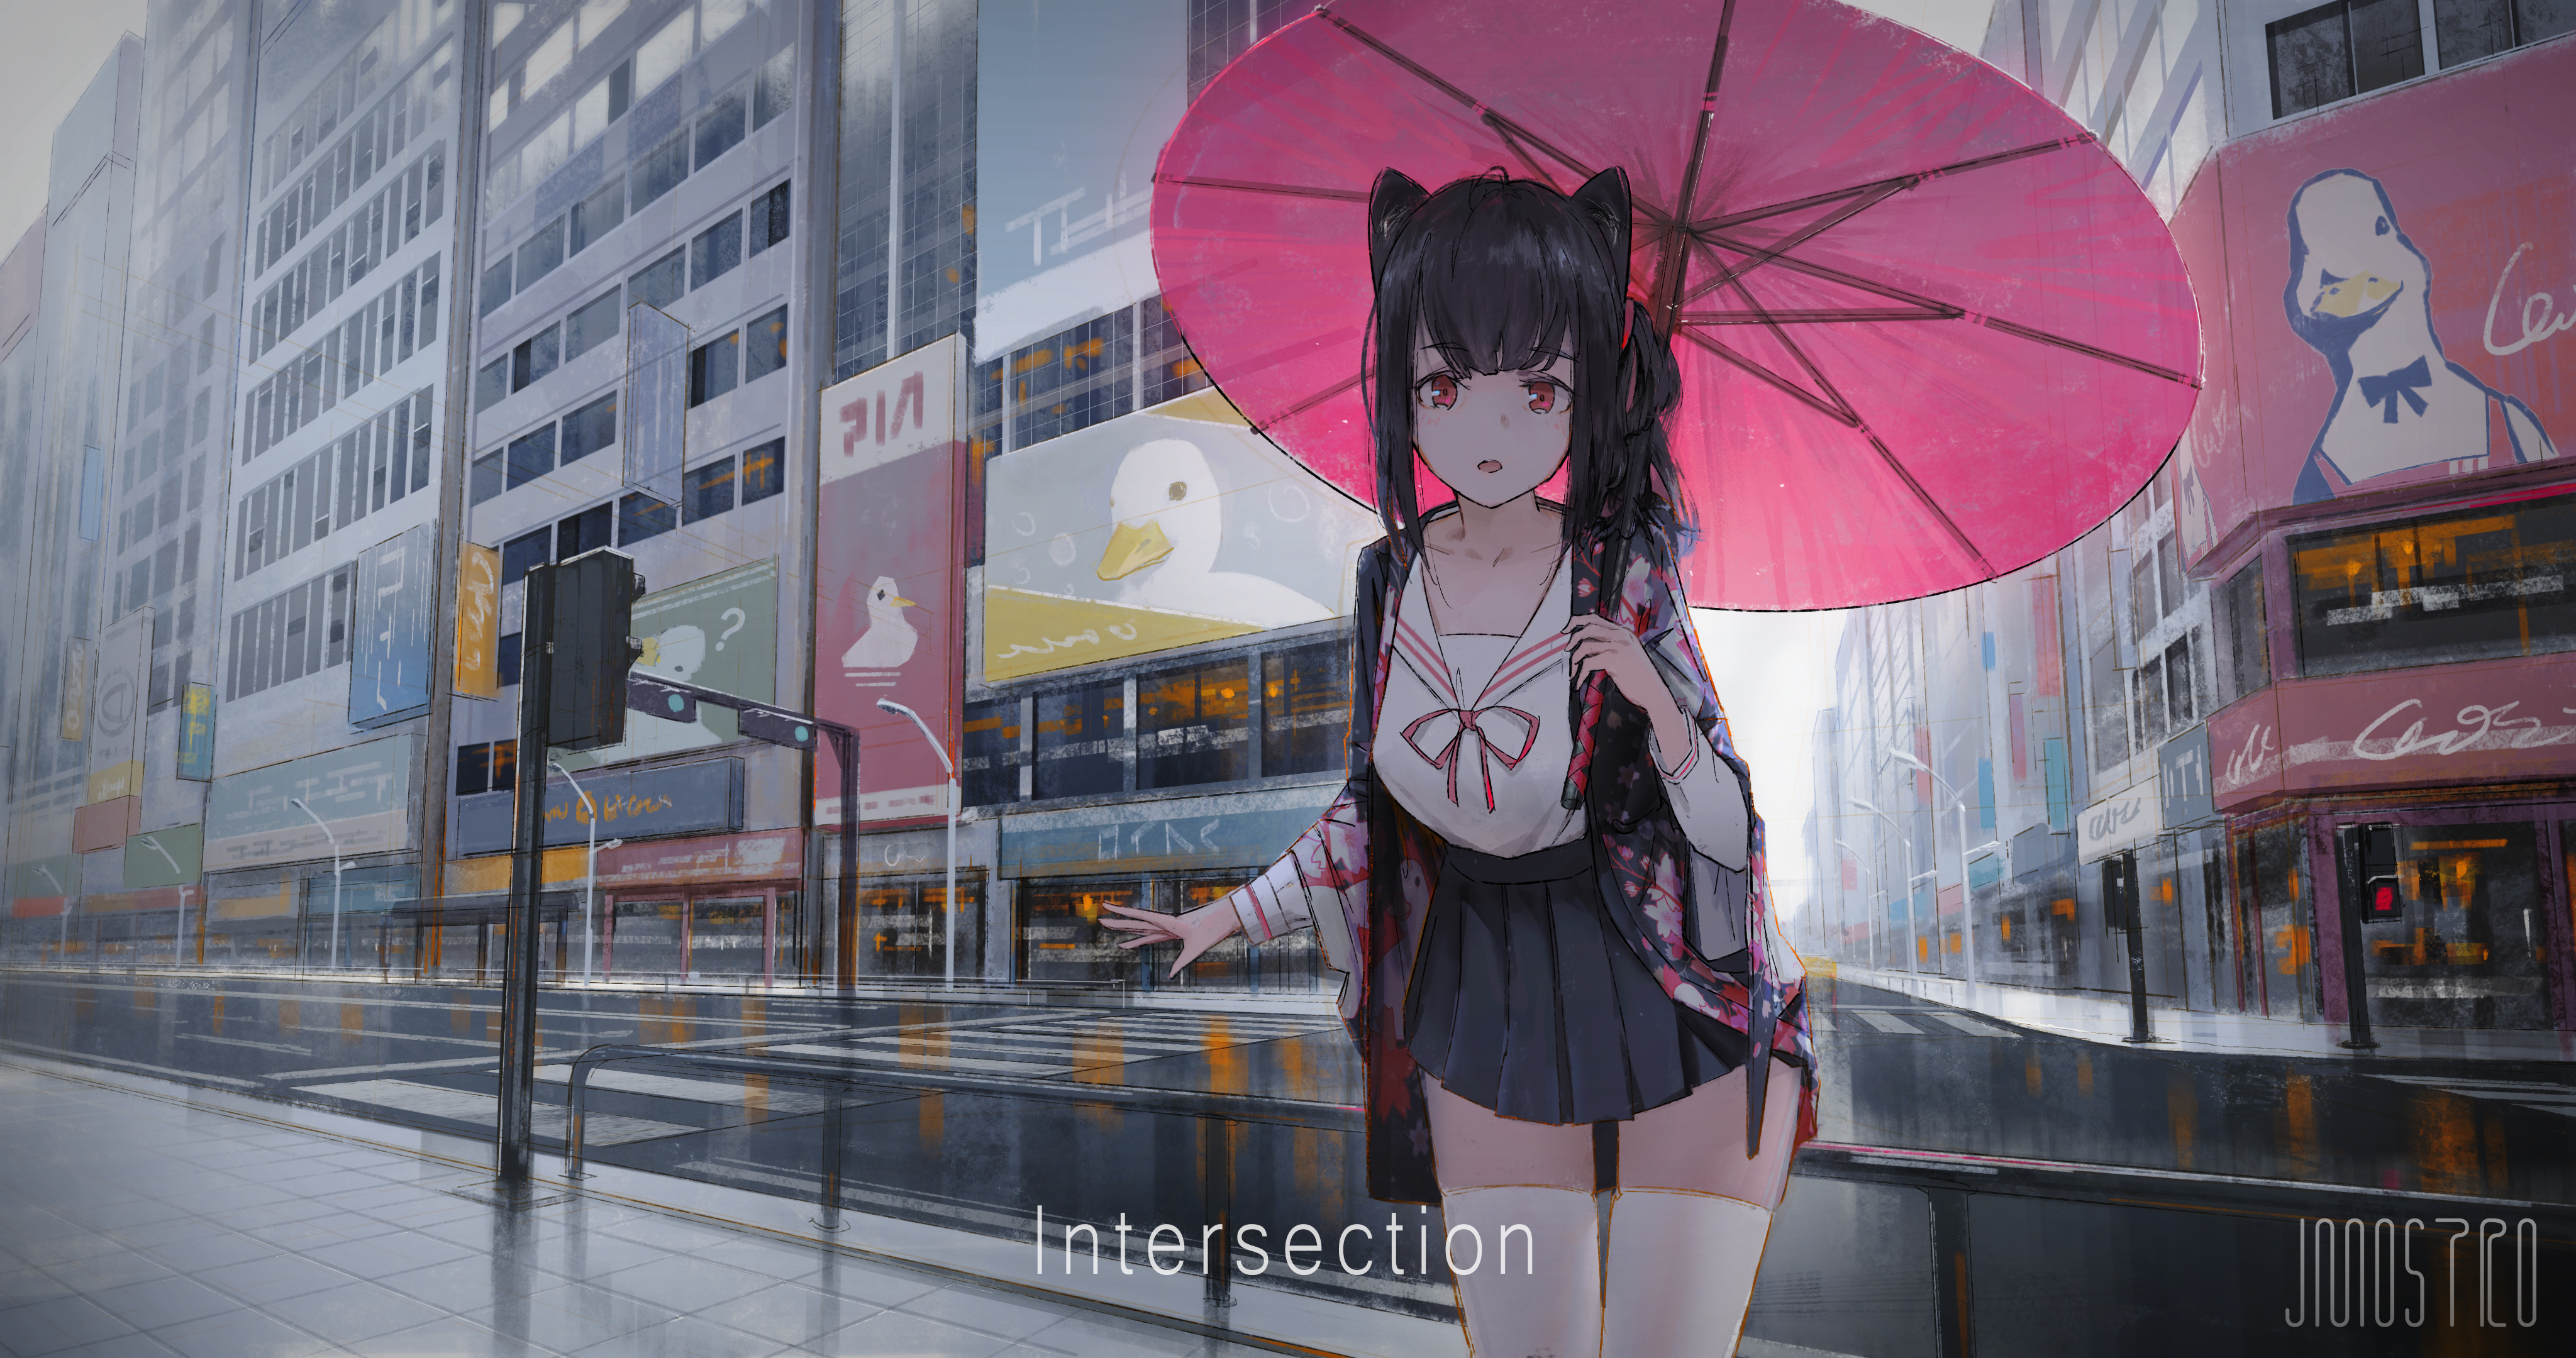 Anime 4096x2160 JMOSTRO anime anime girls urban city umbrella skirt stockings dark hair women outdoors long hair black skirts looking at viewer